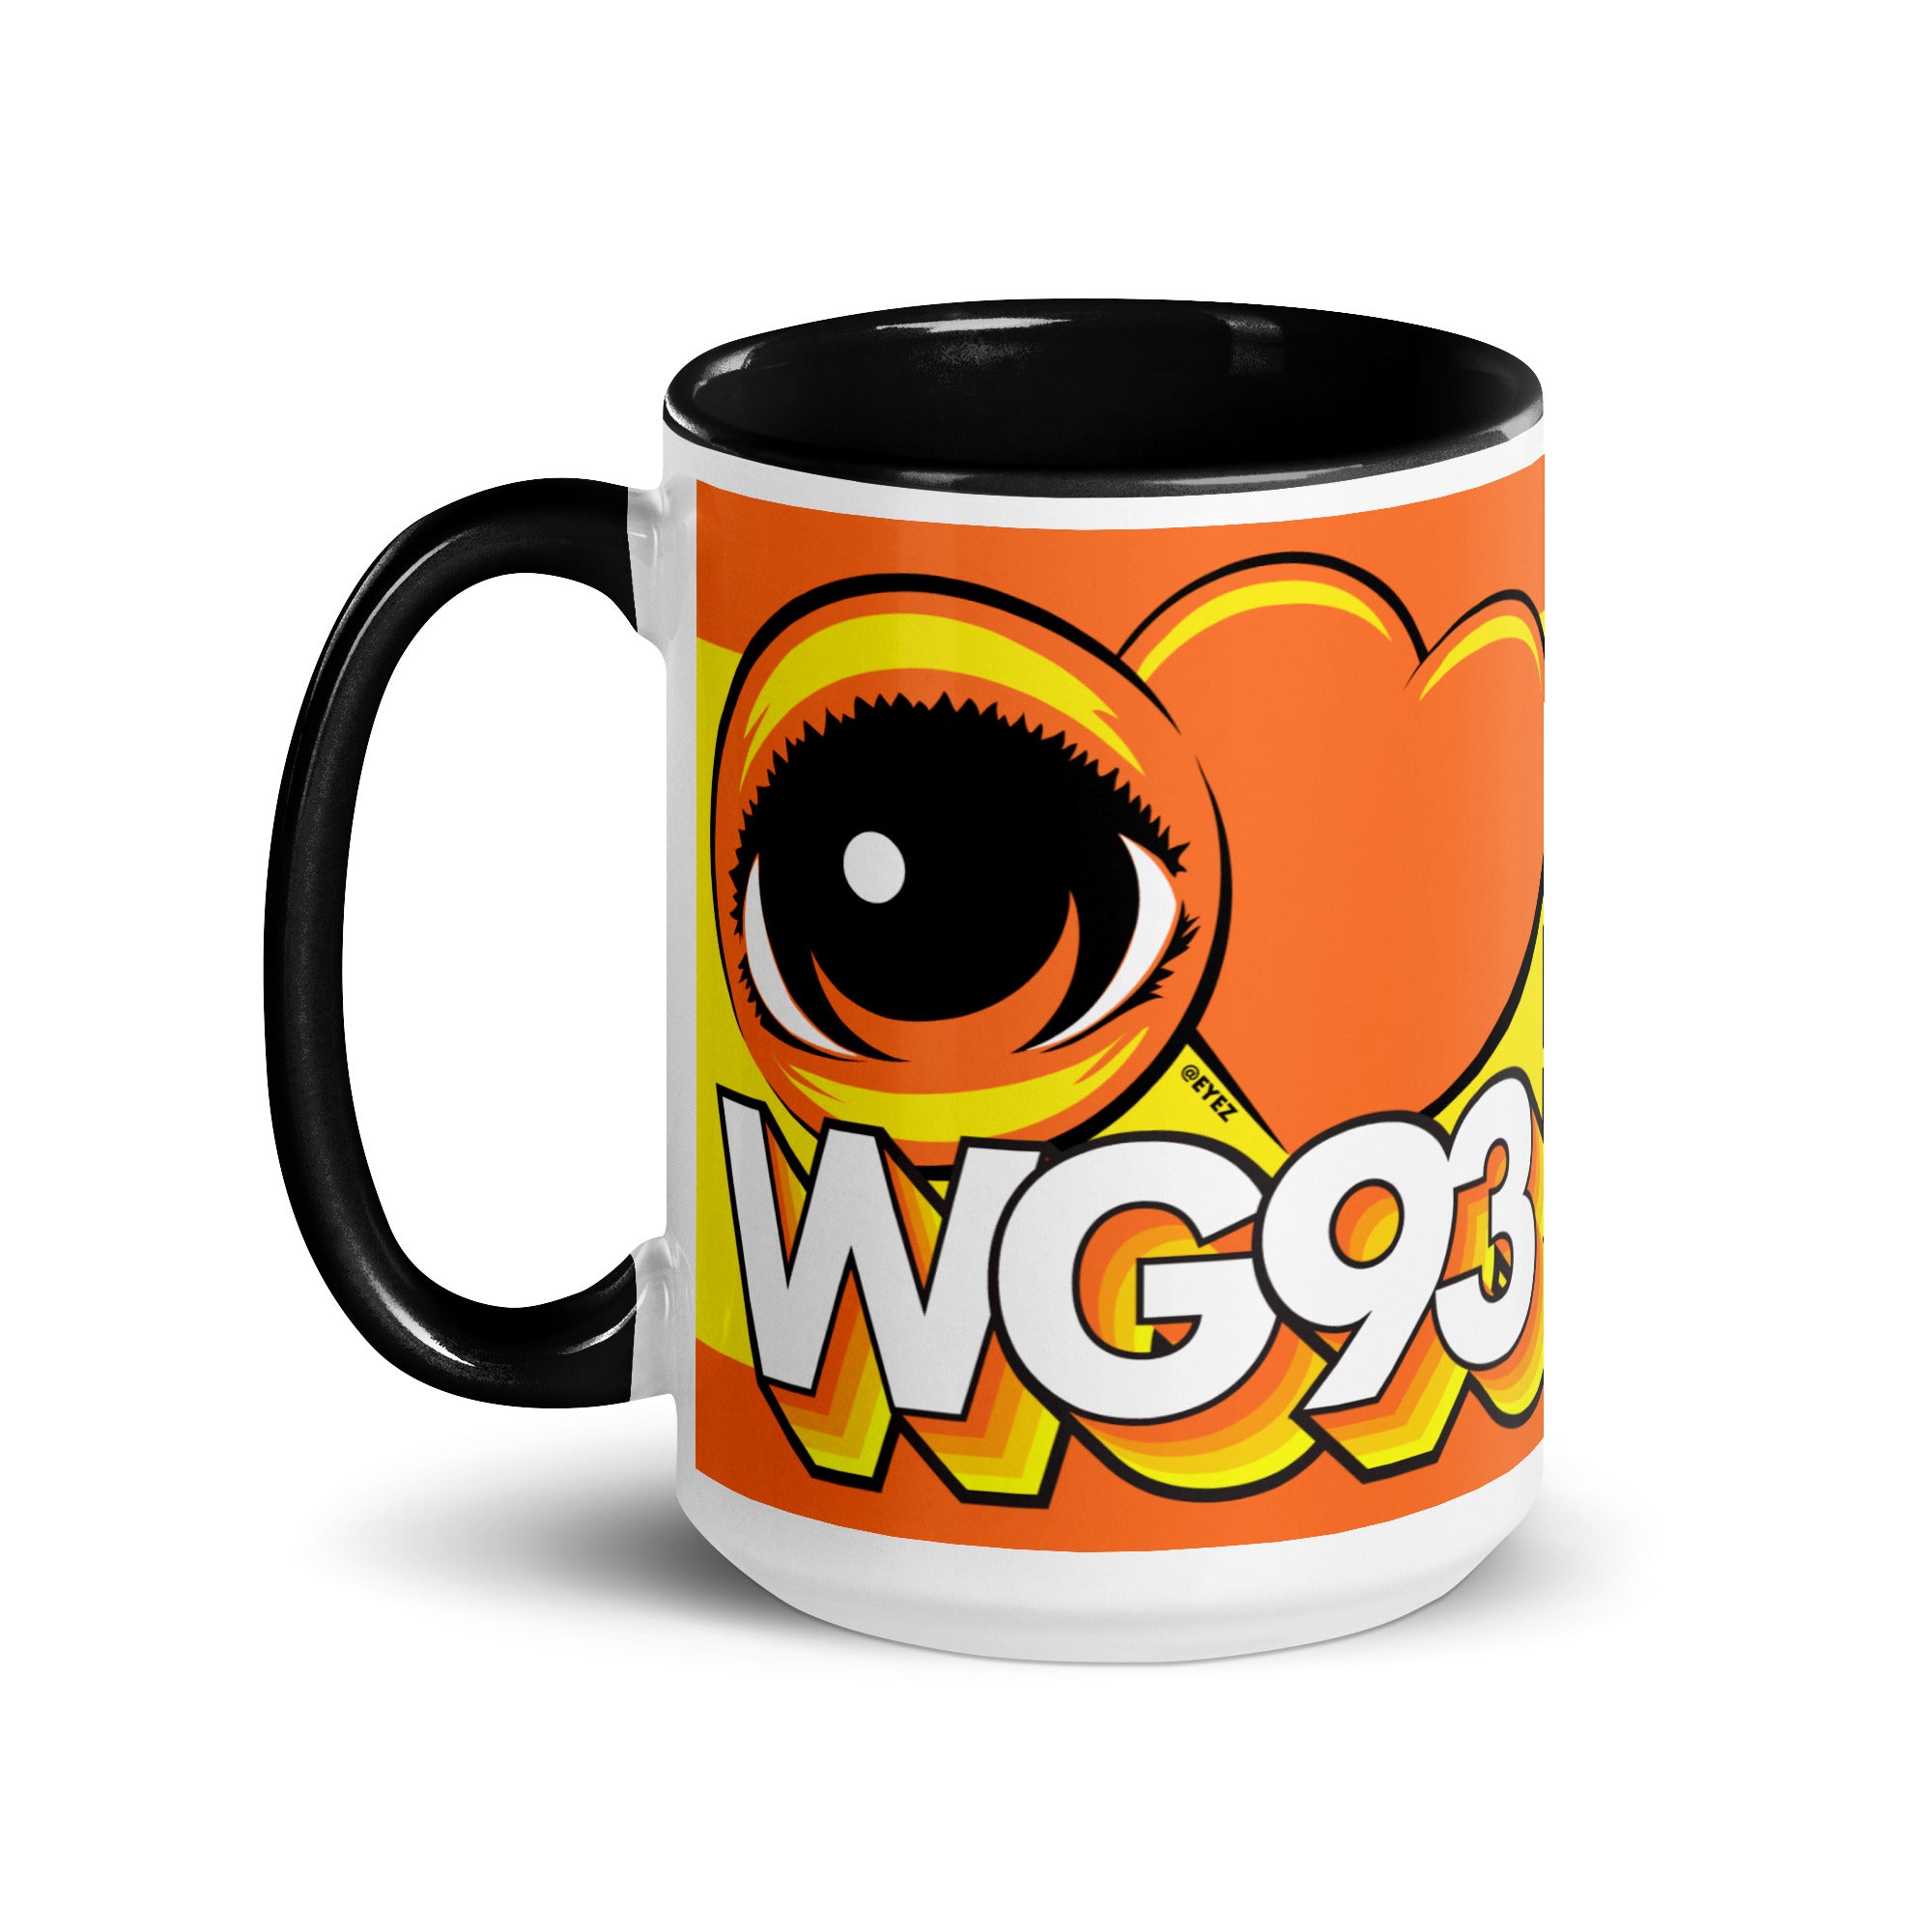 WG93 Mug with Color Inside